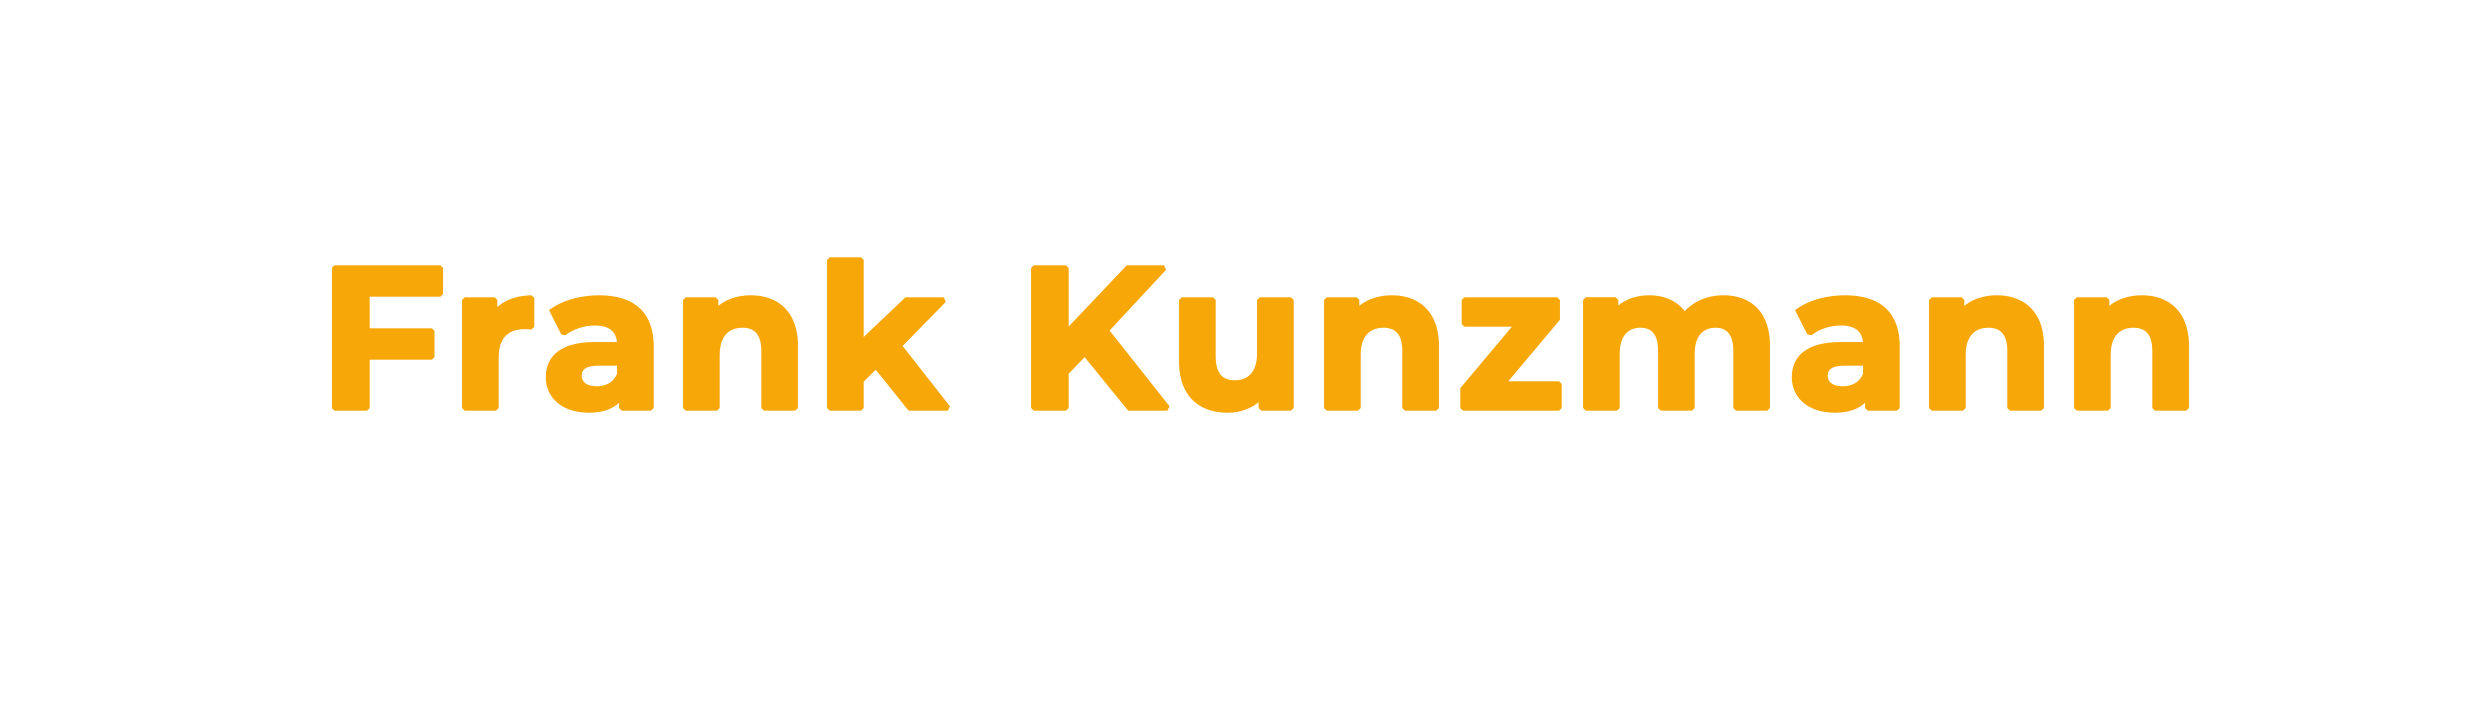 FrankKunzmann